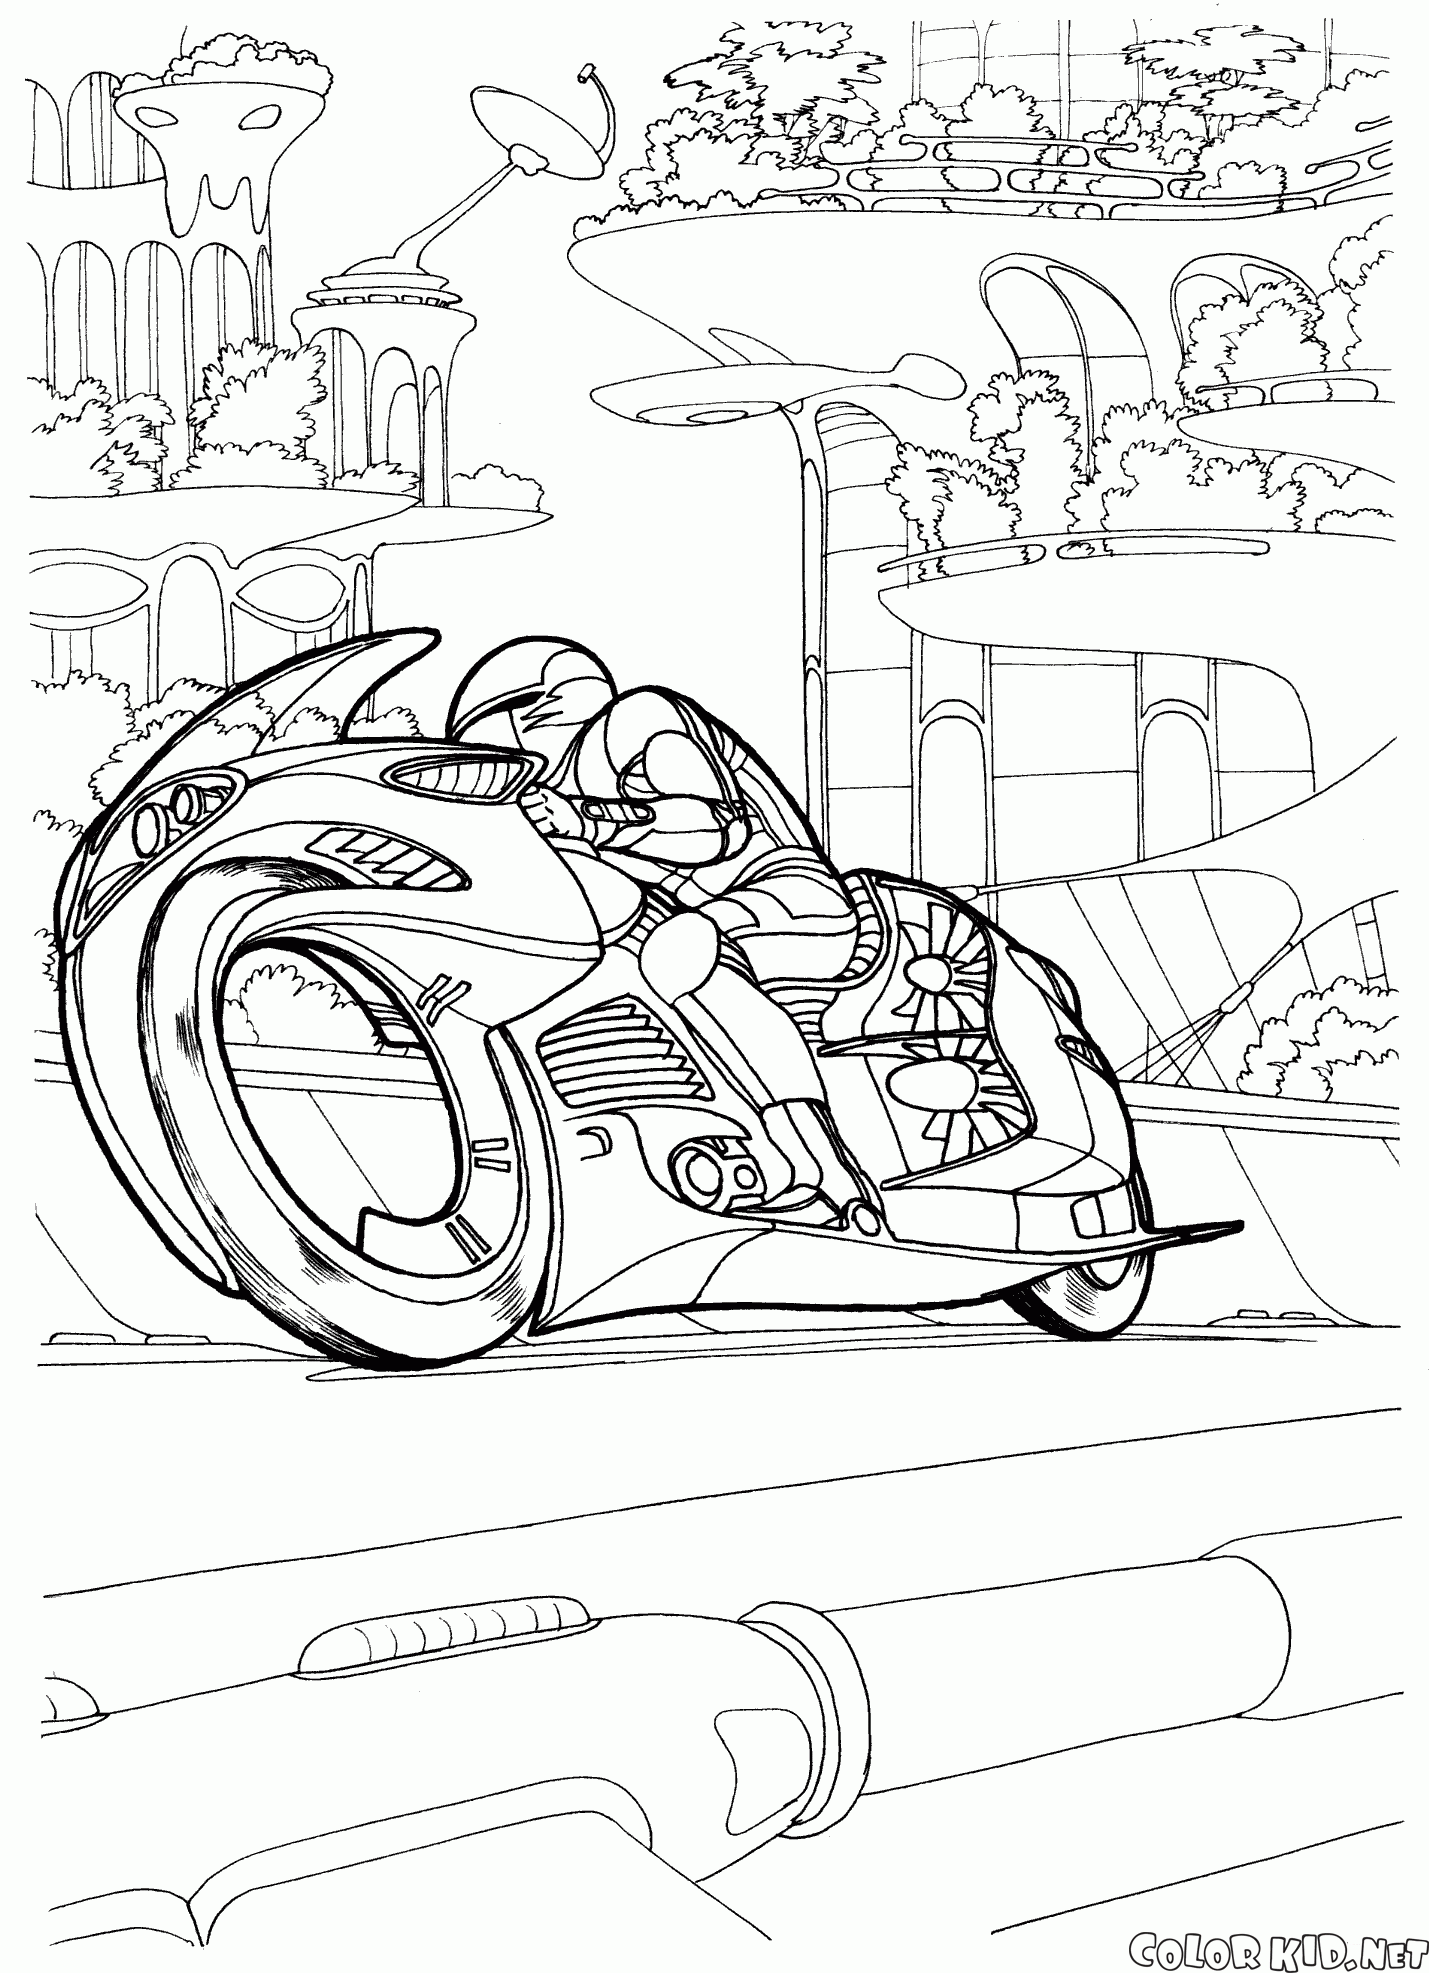 A prototype motorcycle